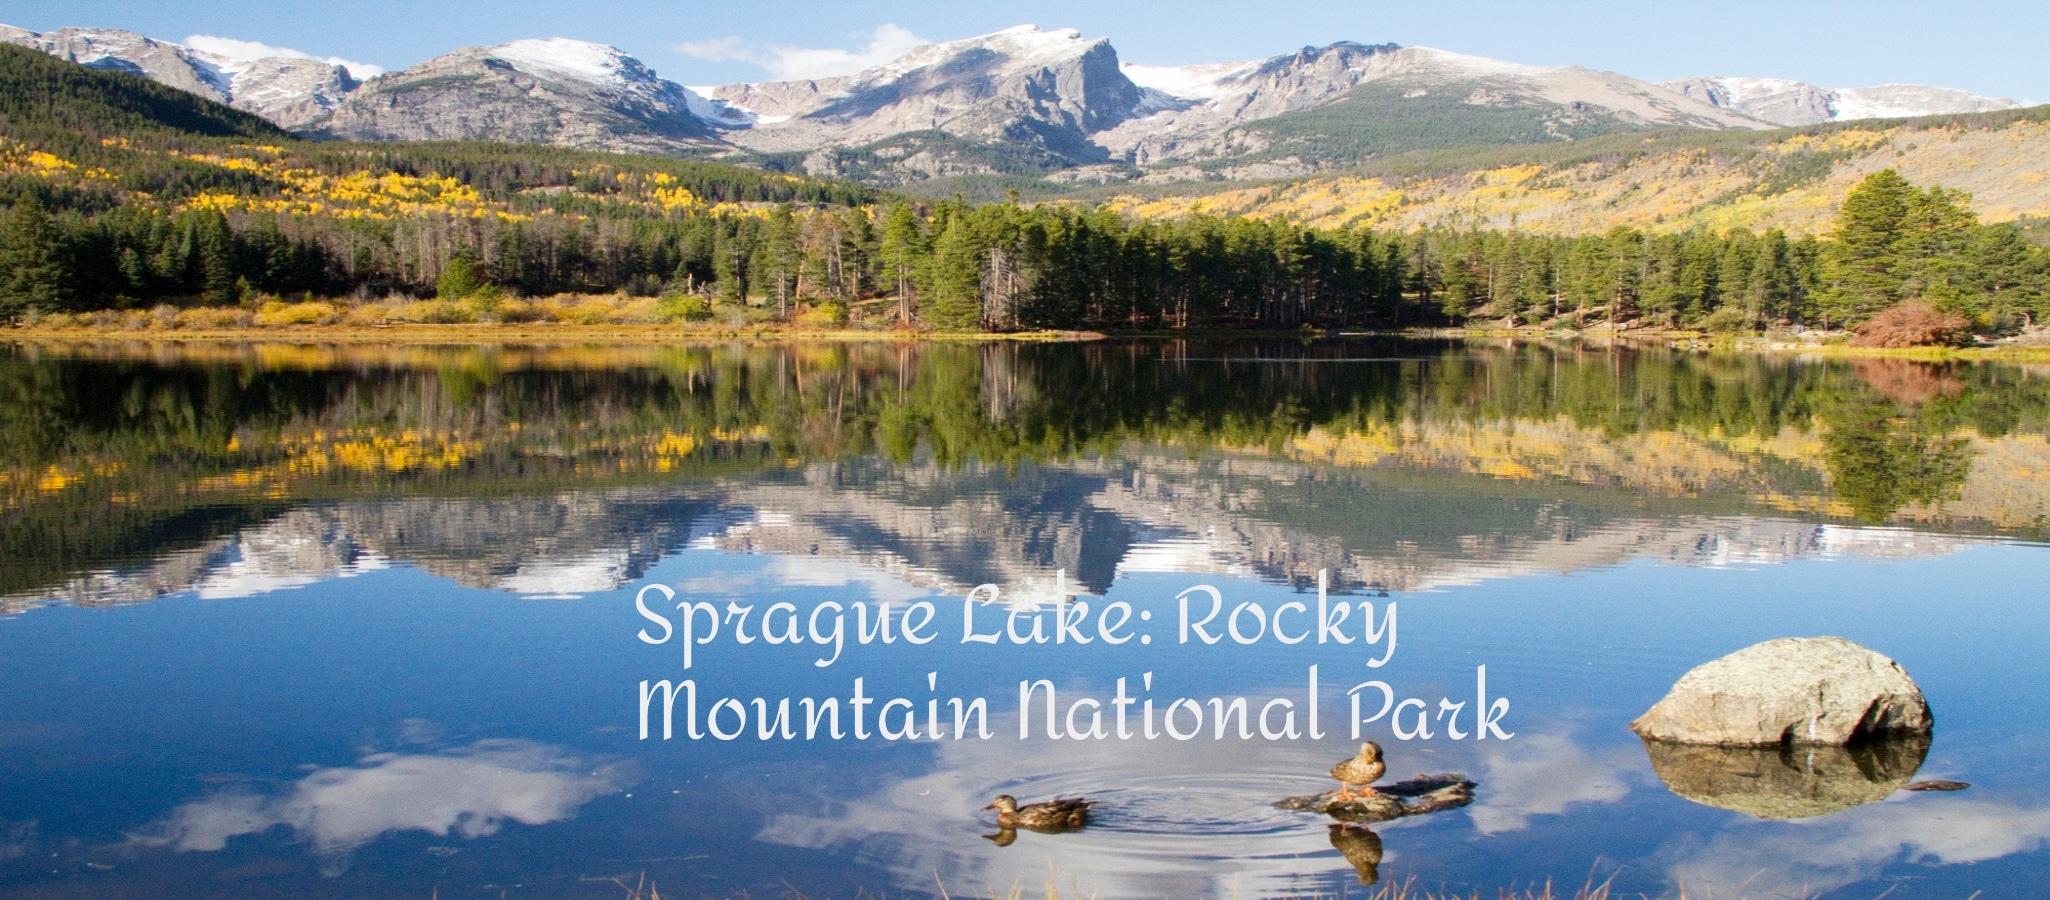 Sprague Lake: Rocky Mountain National Park